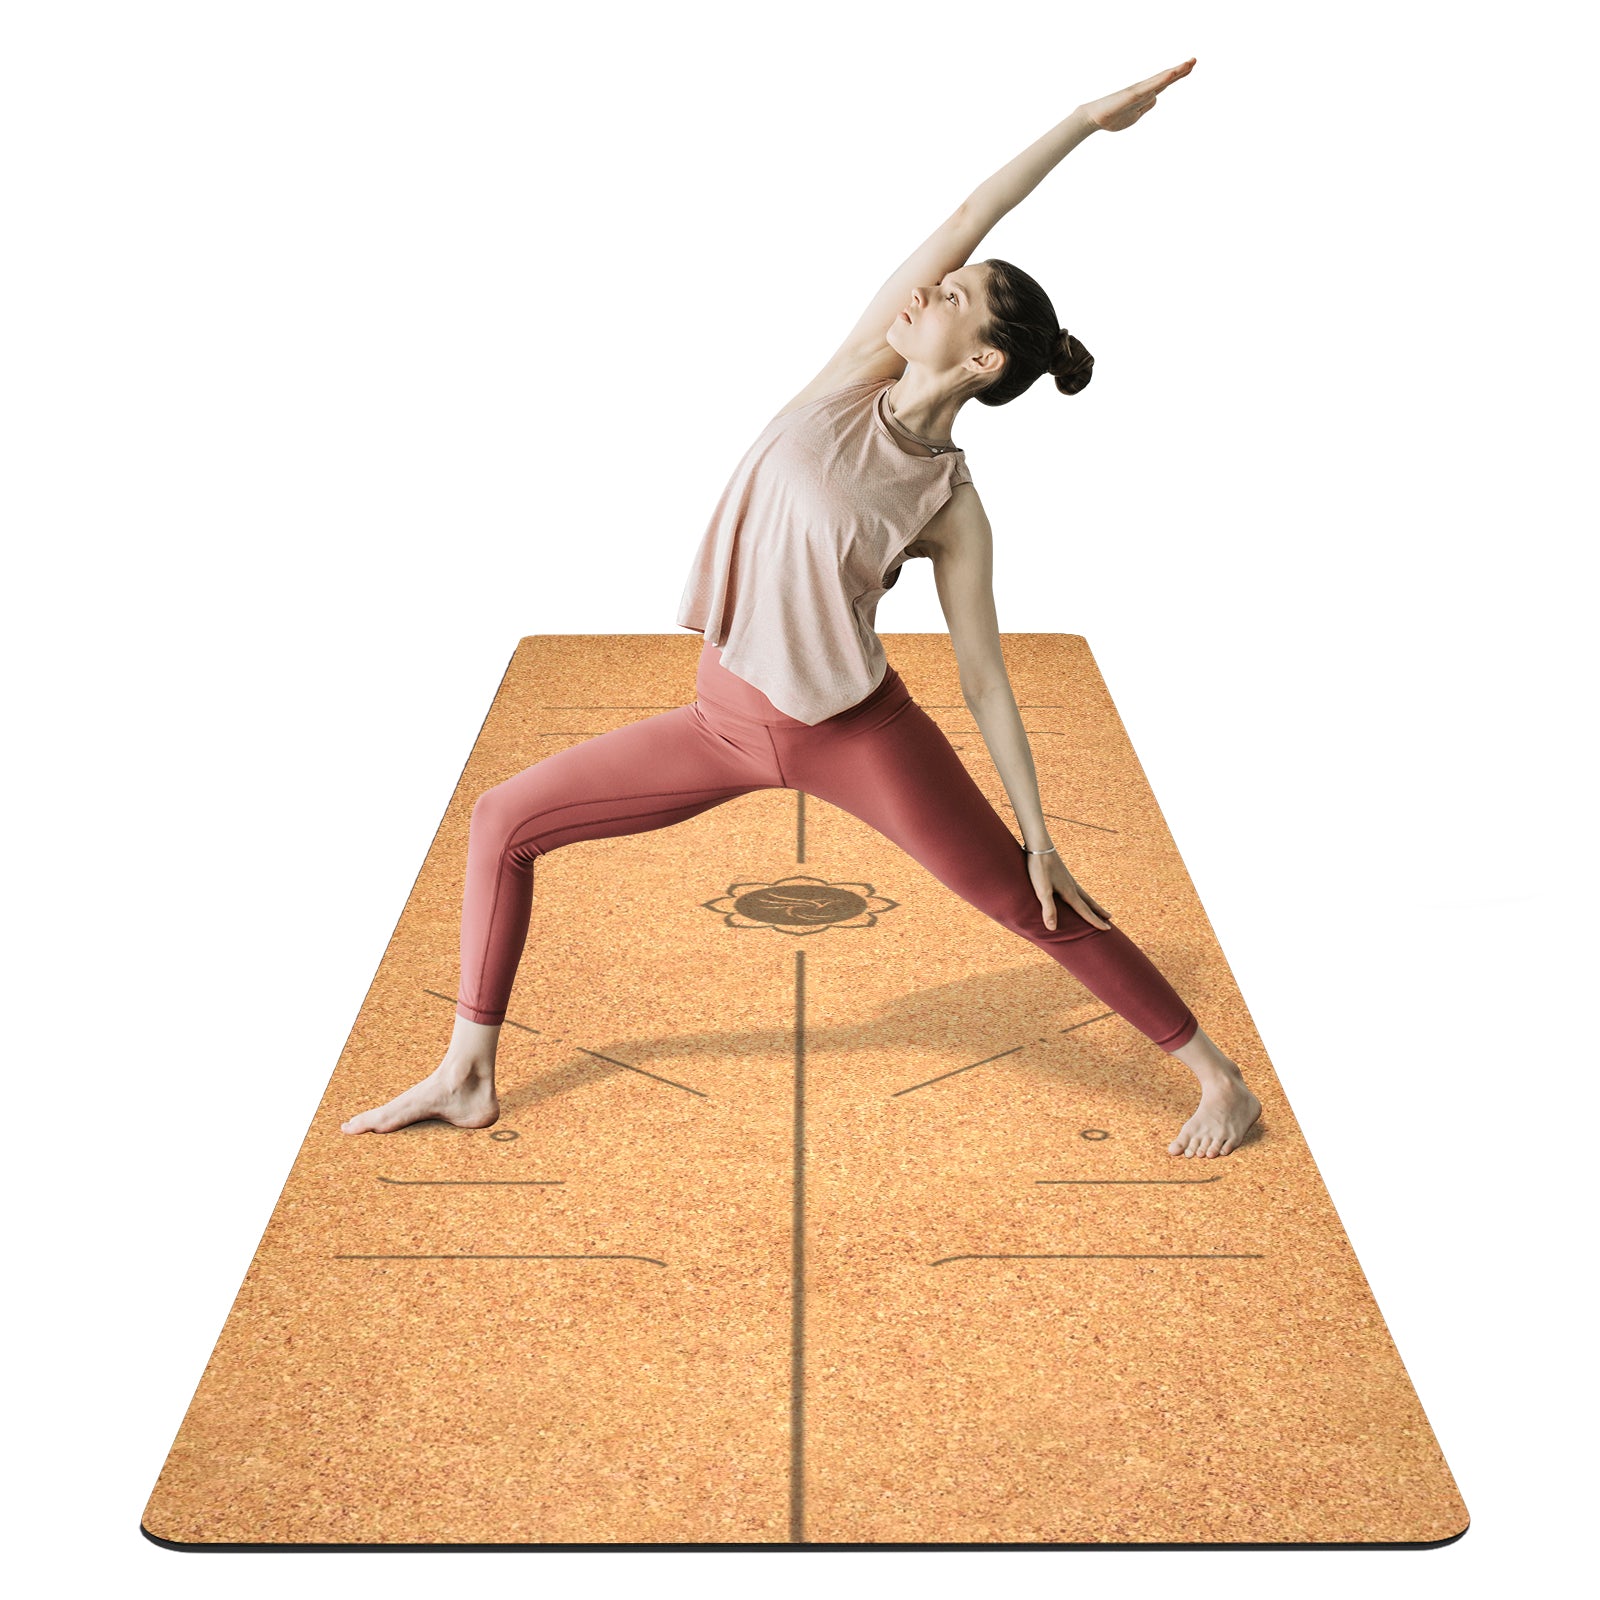 Australia's Best Cork Yoga Mat  2E 'Affinity' Cork Yoga Mat